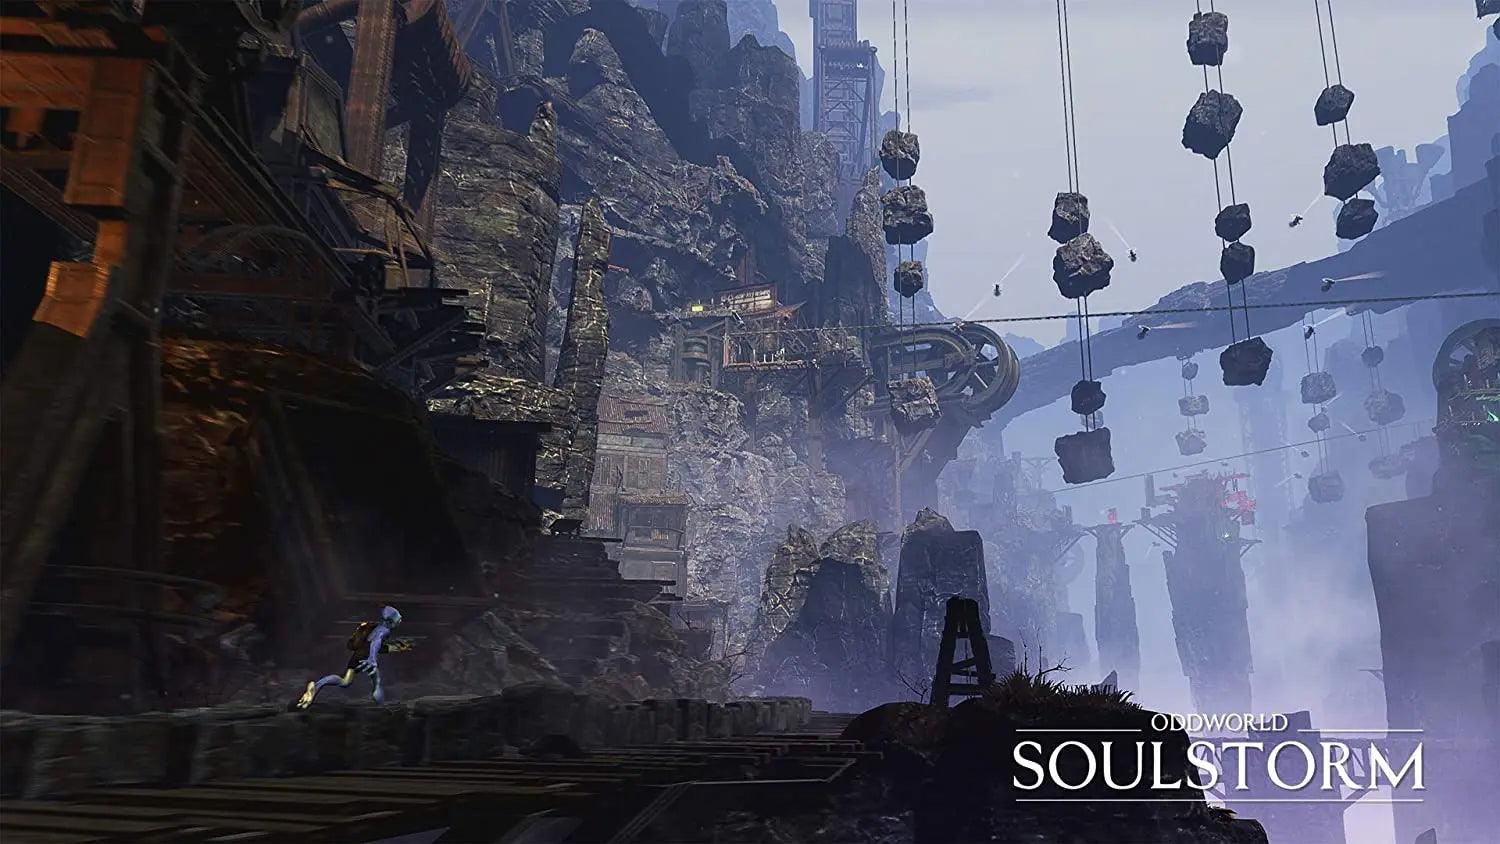 Oddworld Soulstorm (PS4) - GameStore.mt | Powered by Flutisat